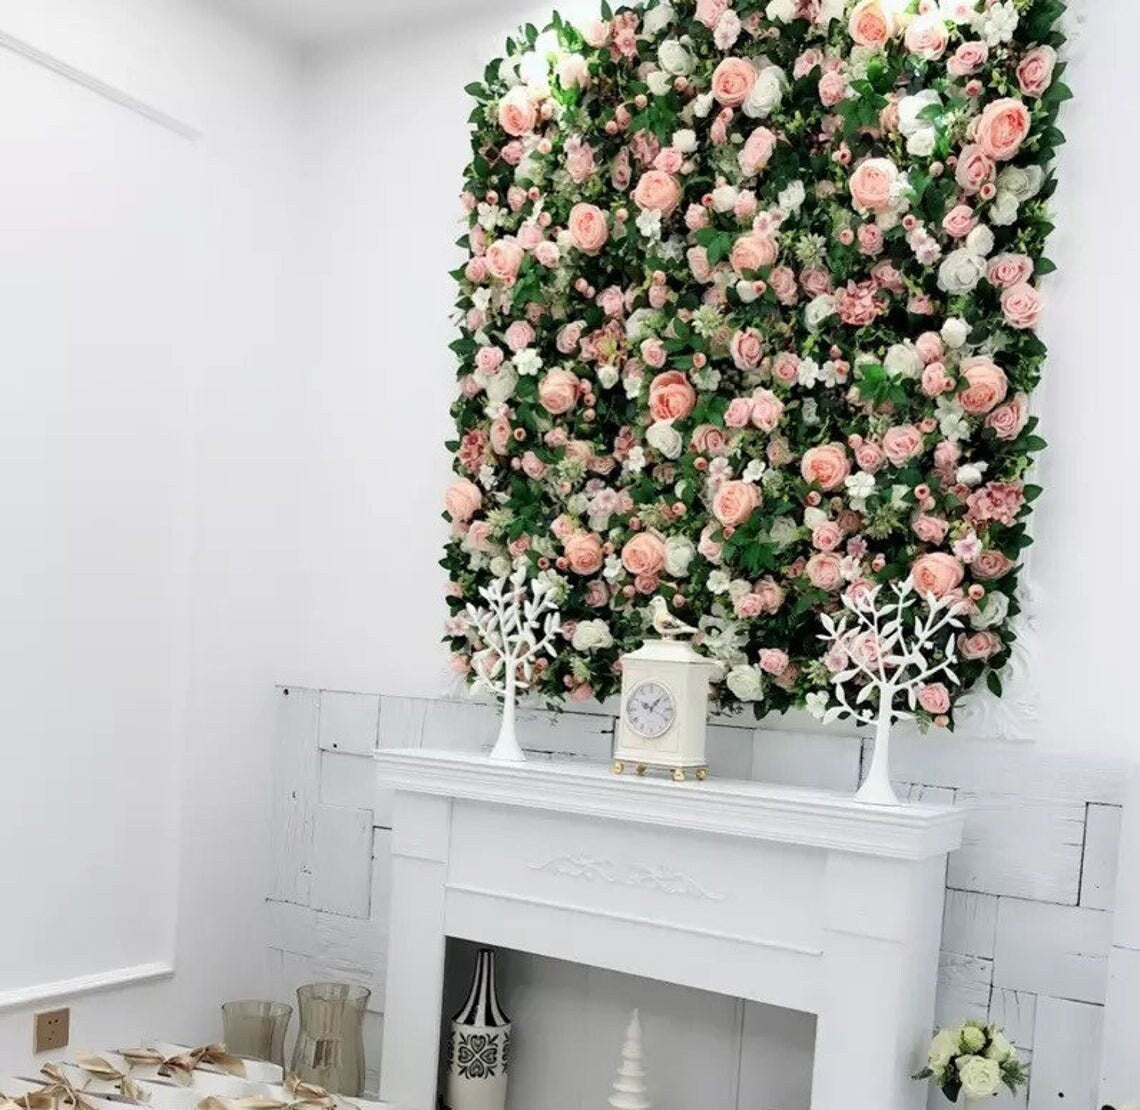 3D Flower Wall Green Plants Wall For Wedding Photography Backdrop Special Event Salon Boutique Shop DecorArrangement Floral Panels 40x60cm